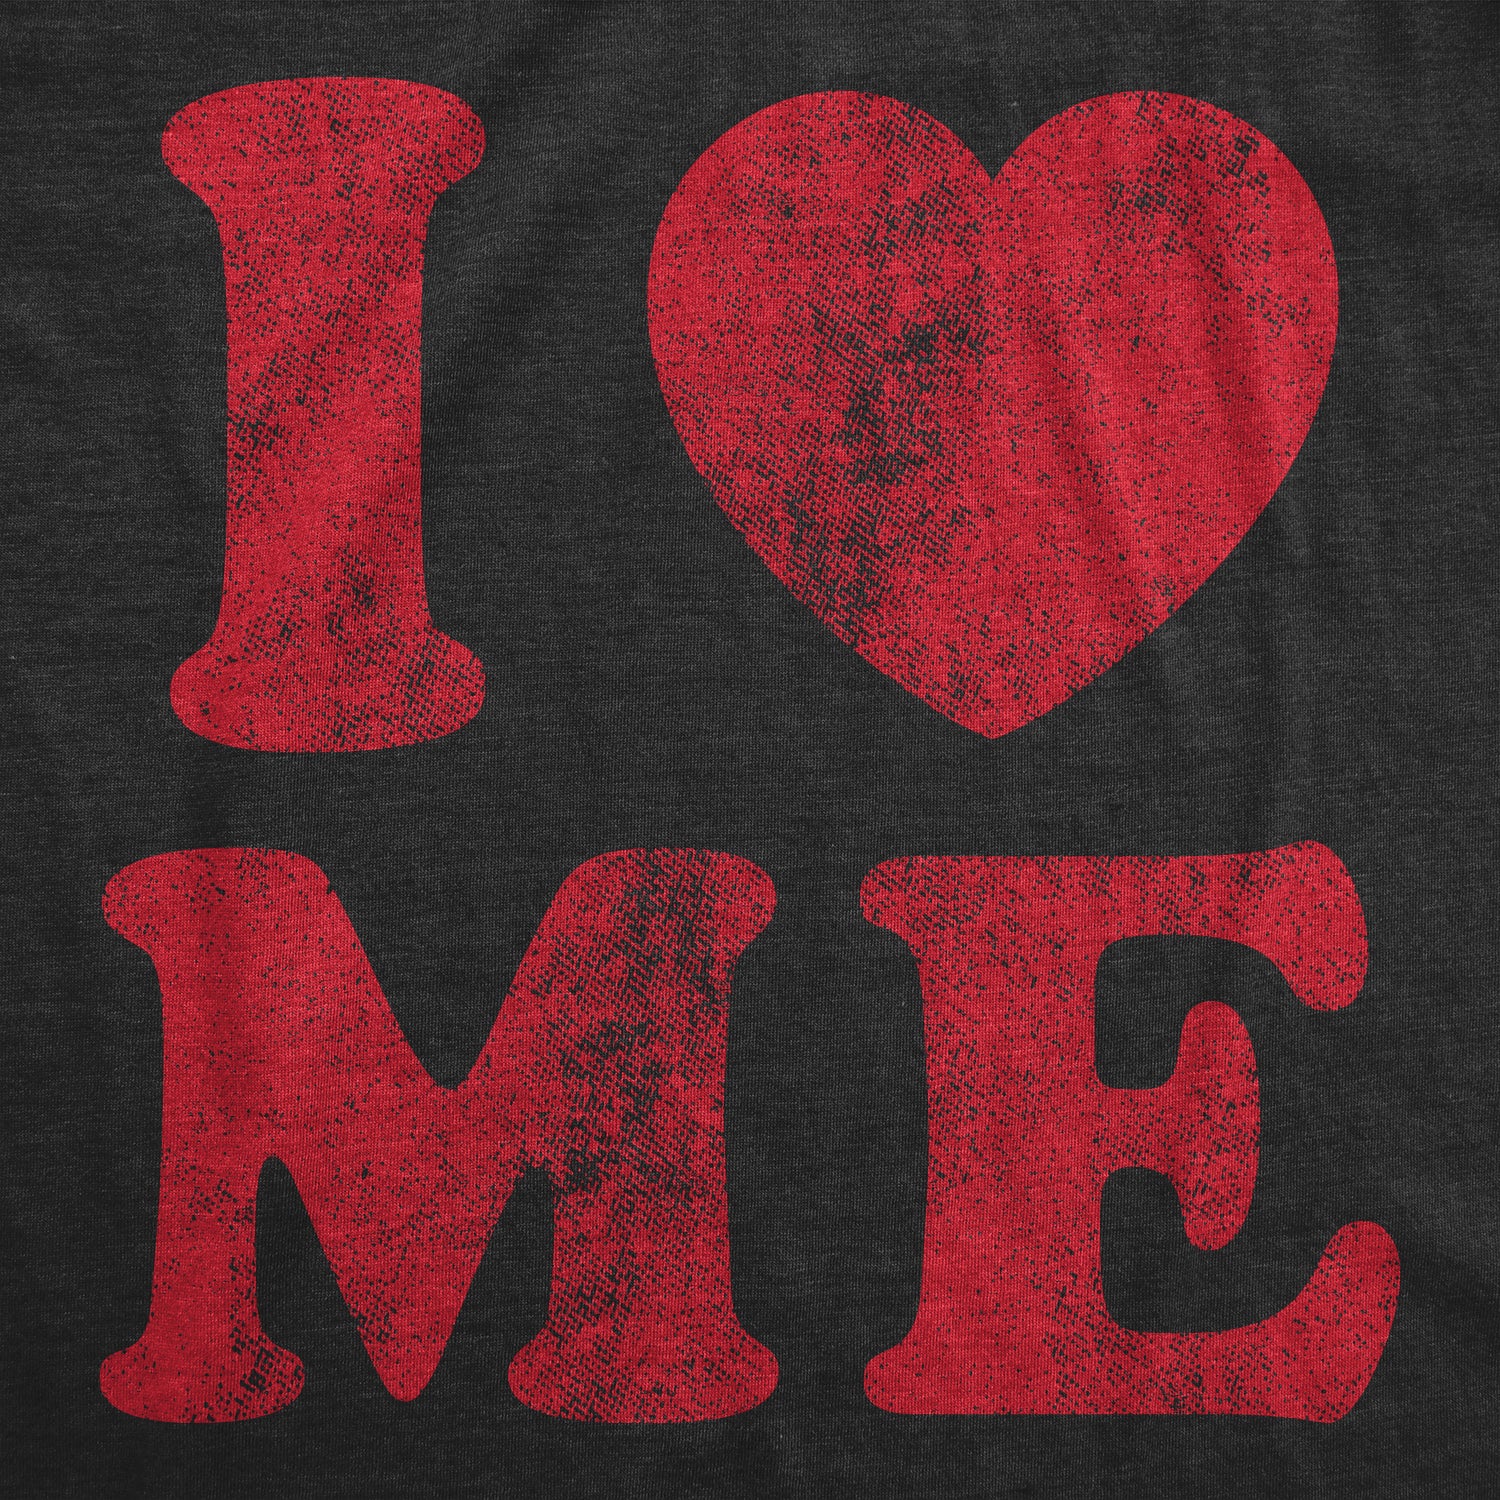 Funny Heather Black I Love Me Mens T Shirt Nerdy Valentine's Day Sarcastic Tee